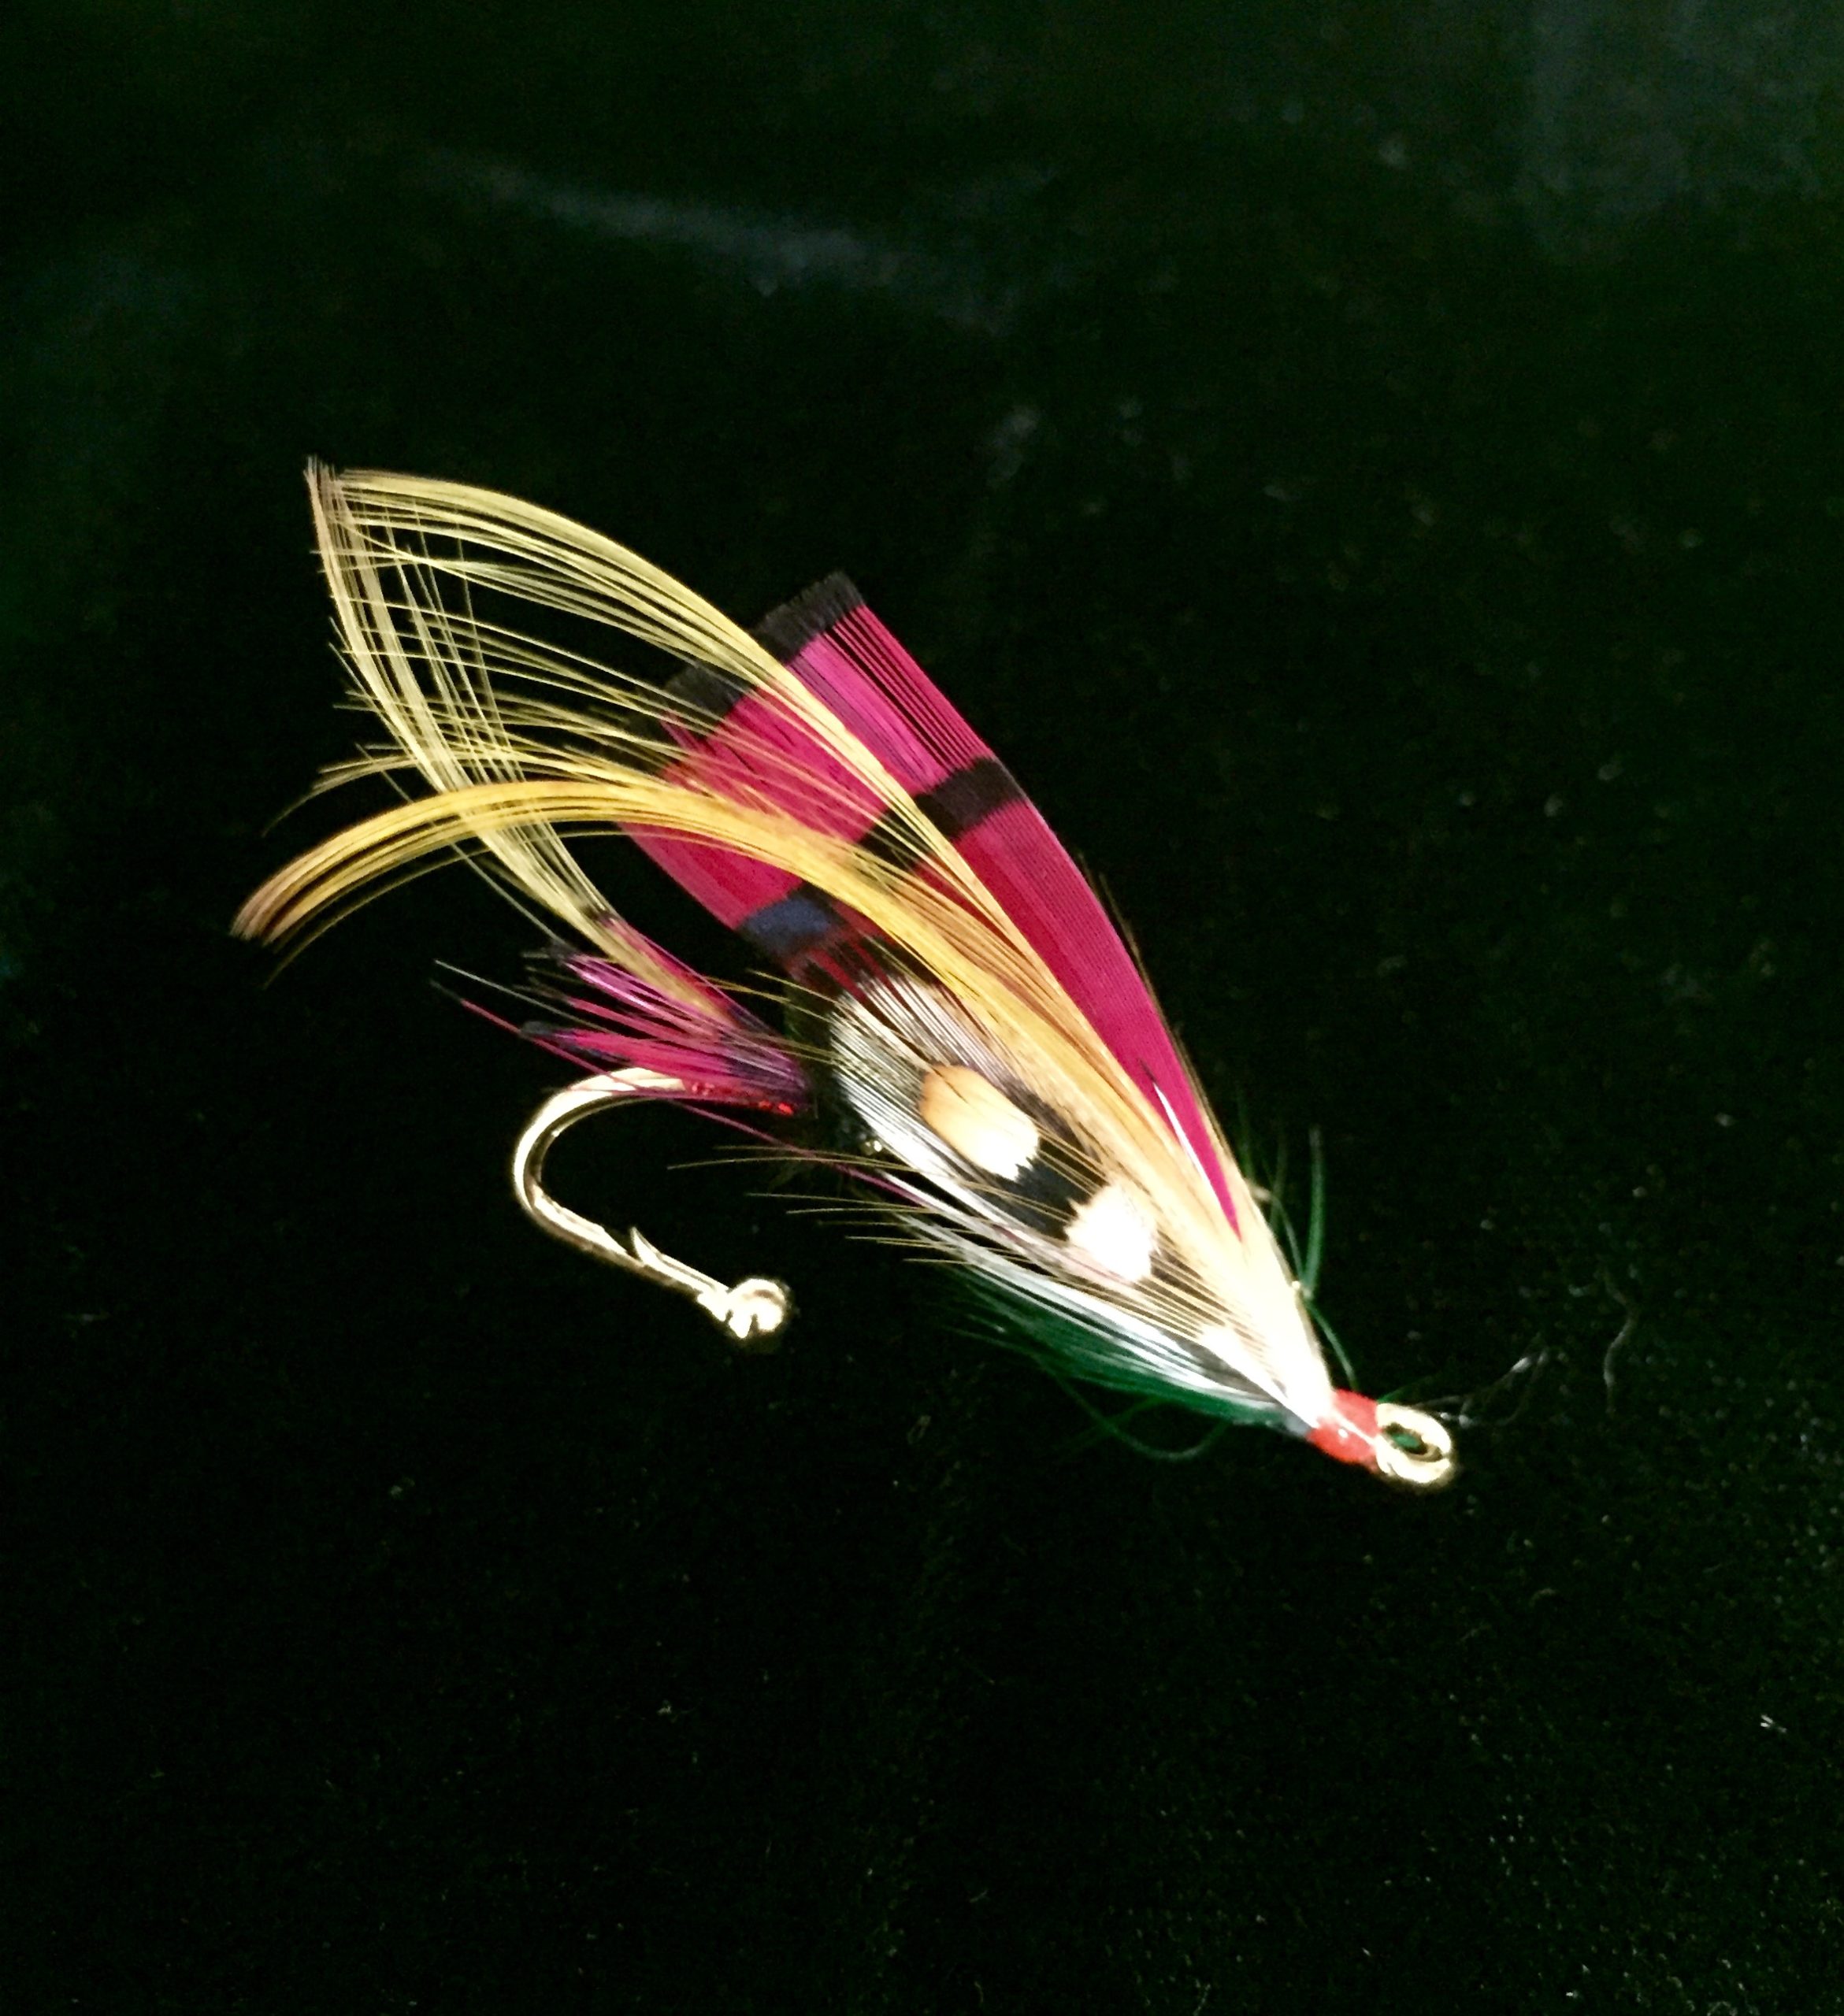 The Durham Ranger fly fishing lapel pin